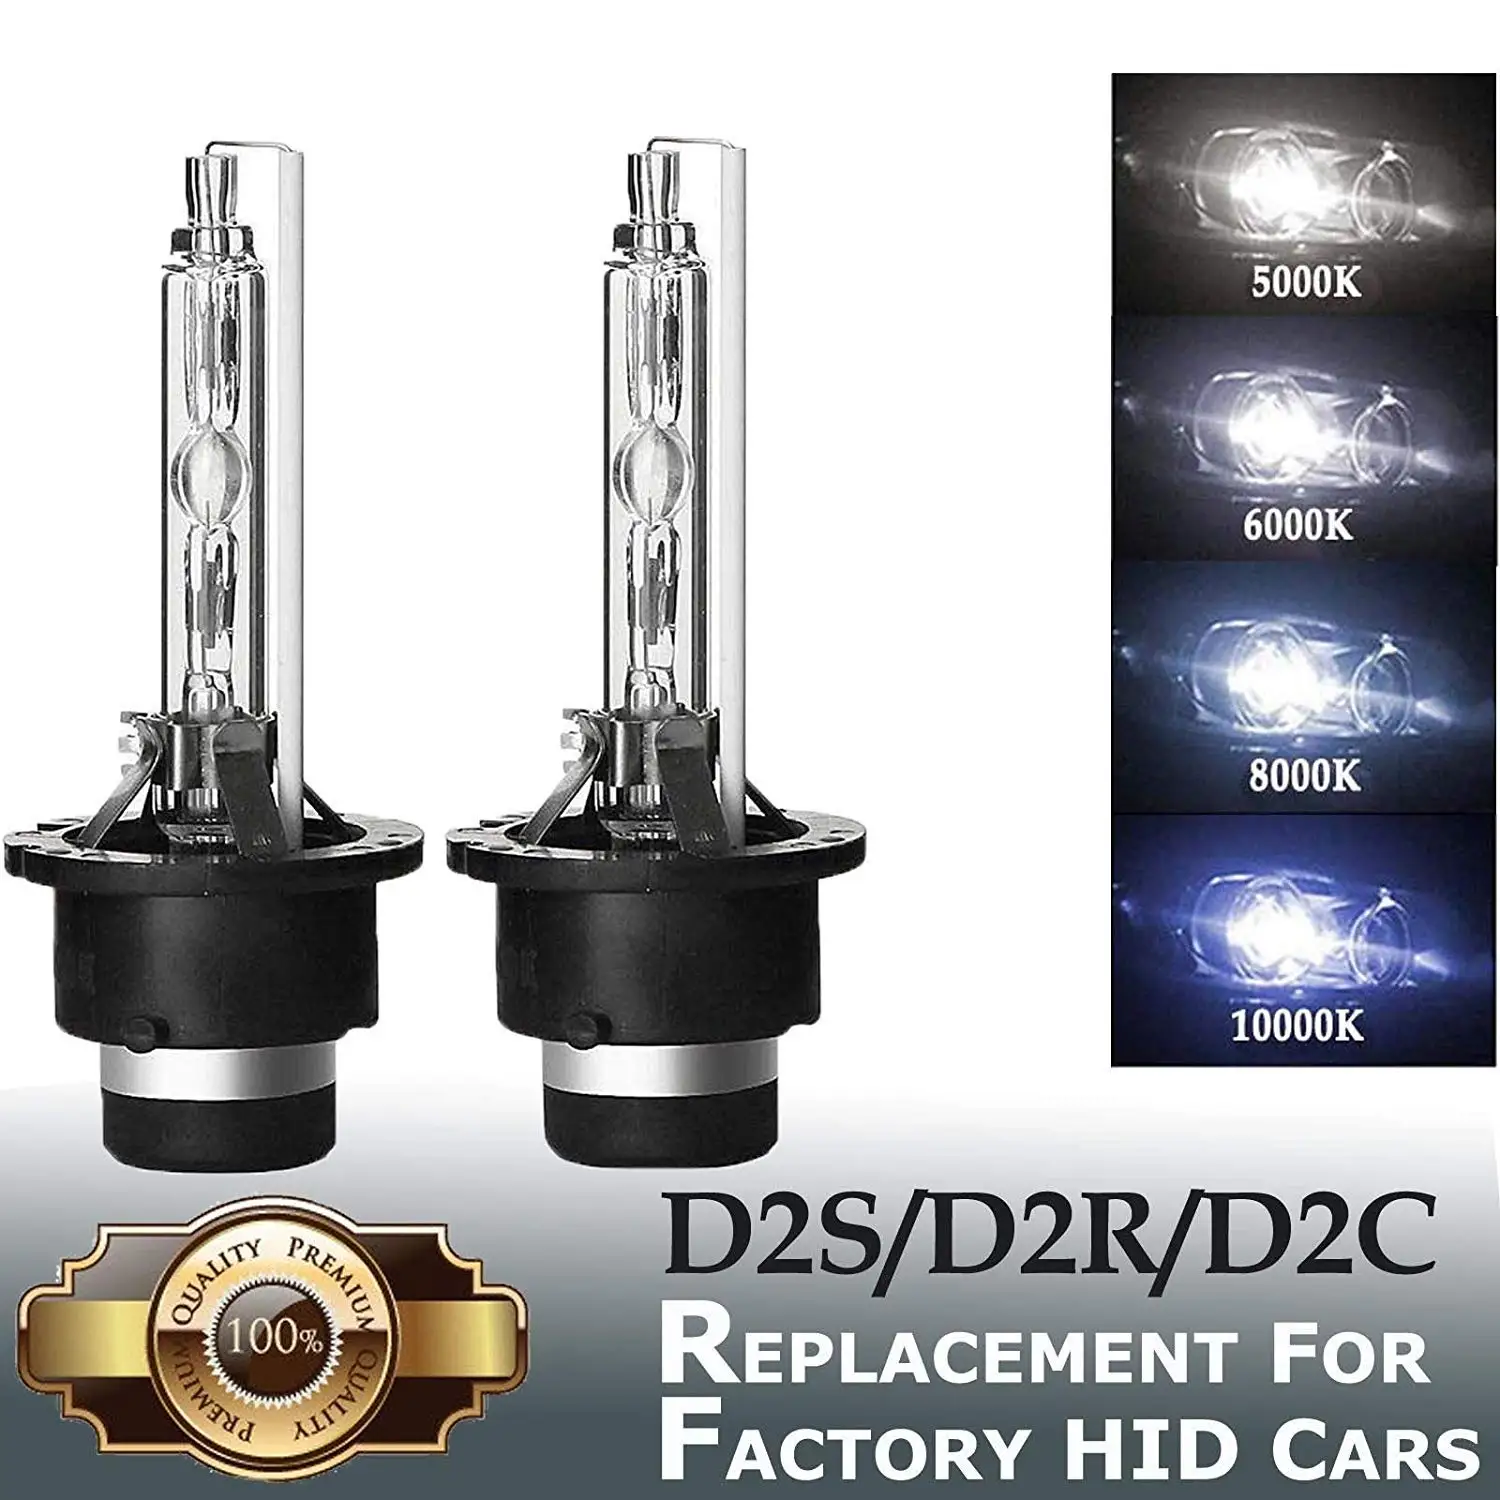 

Ксеноновые лампы для автомобильных фар, 2 шт., D2S, D2R, D4S, D2R, 55 Вт, ксеноновые лампы для автомобильных фар с защитой металлического кронштейна, ...